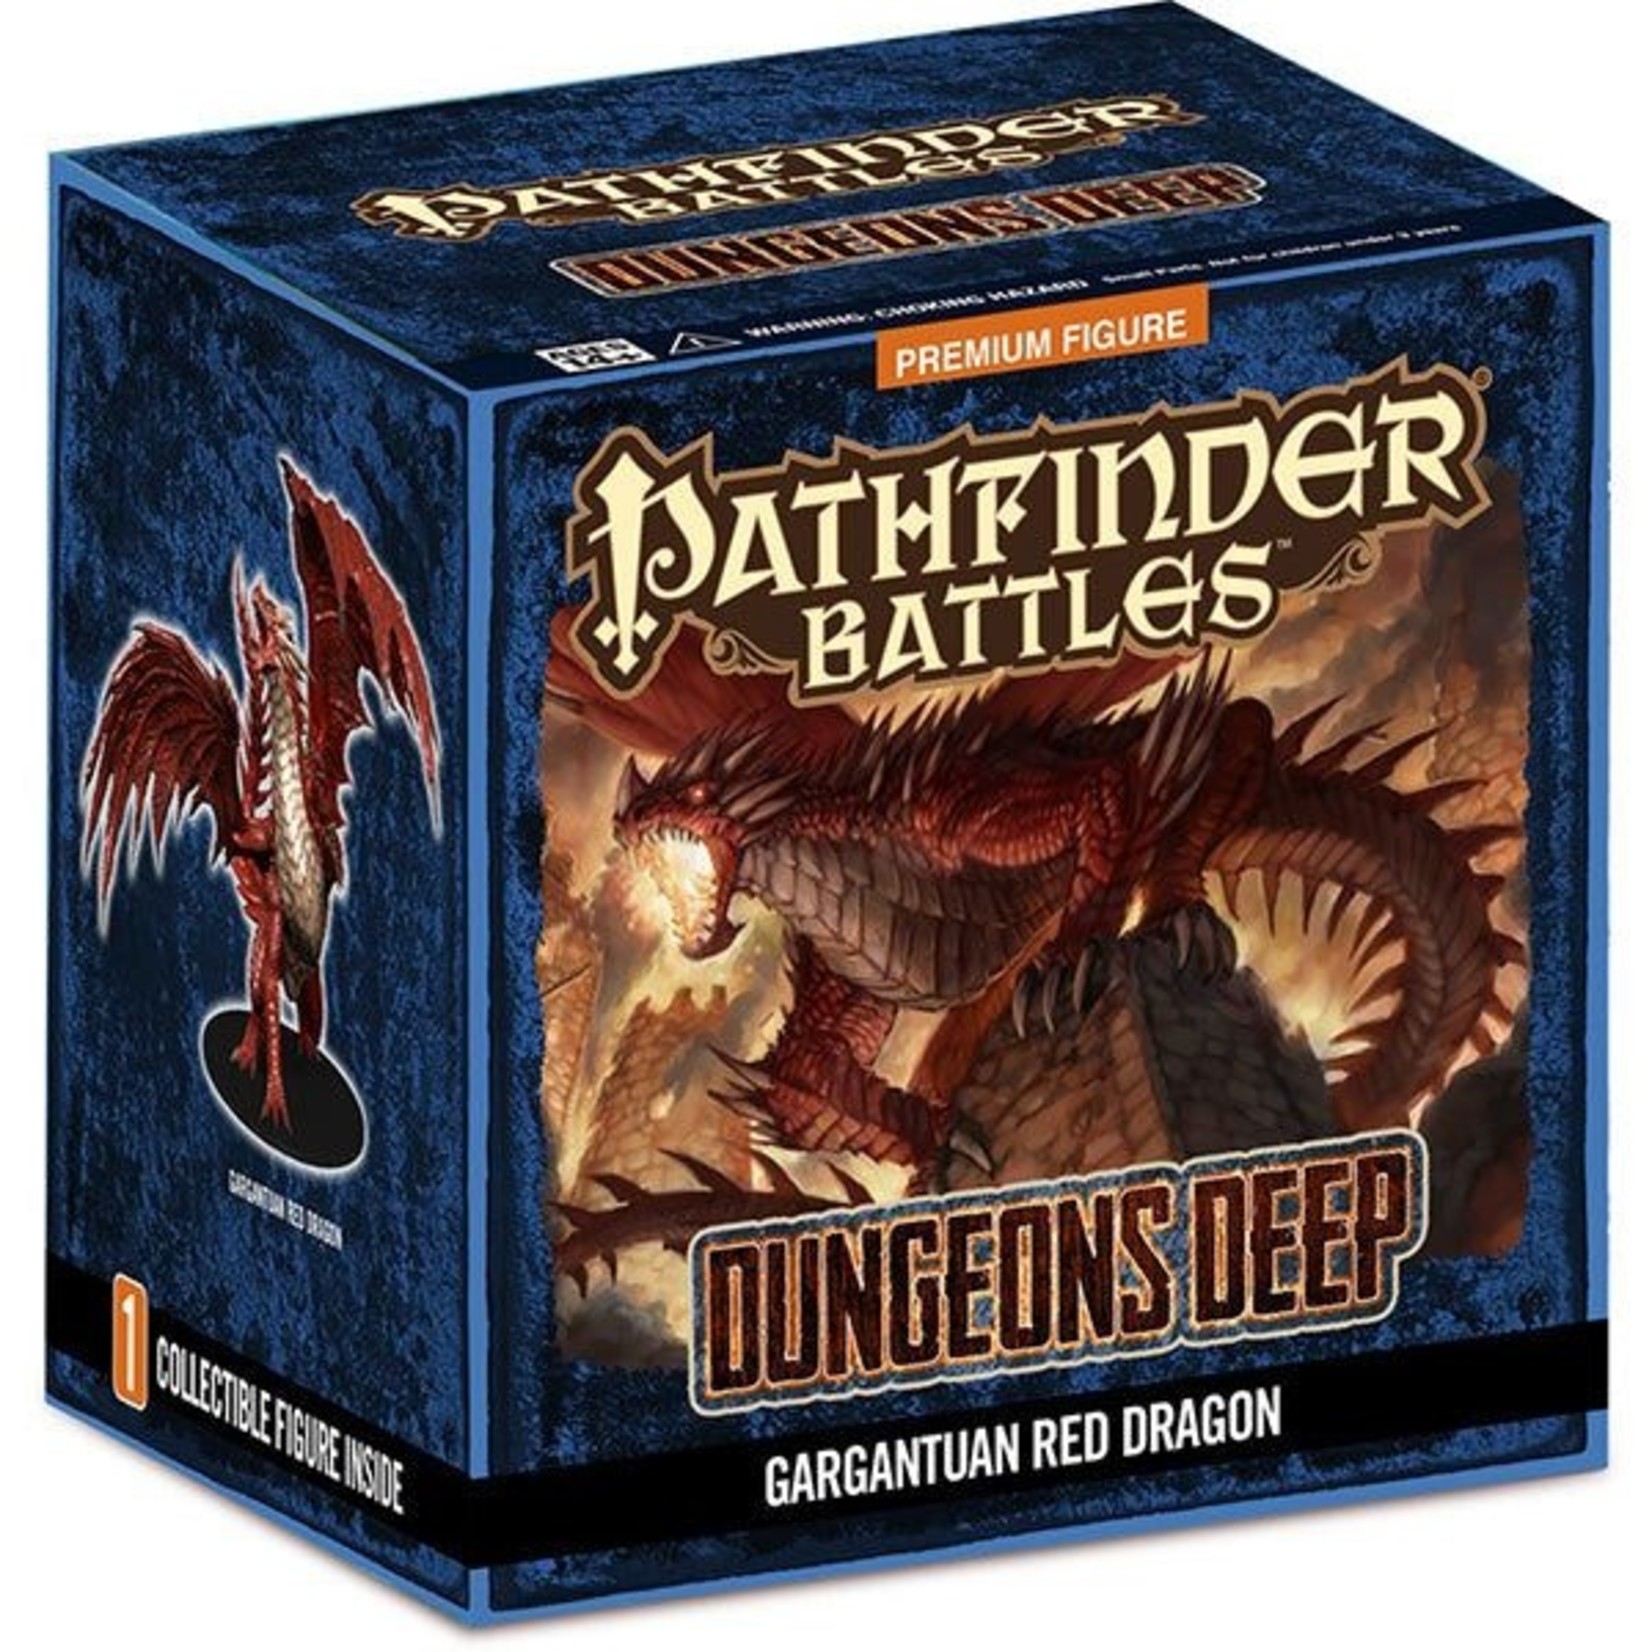 WizKids/Neca Pathfinder Battles "Dungeon Deep" Gargantuan Red Dragon